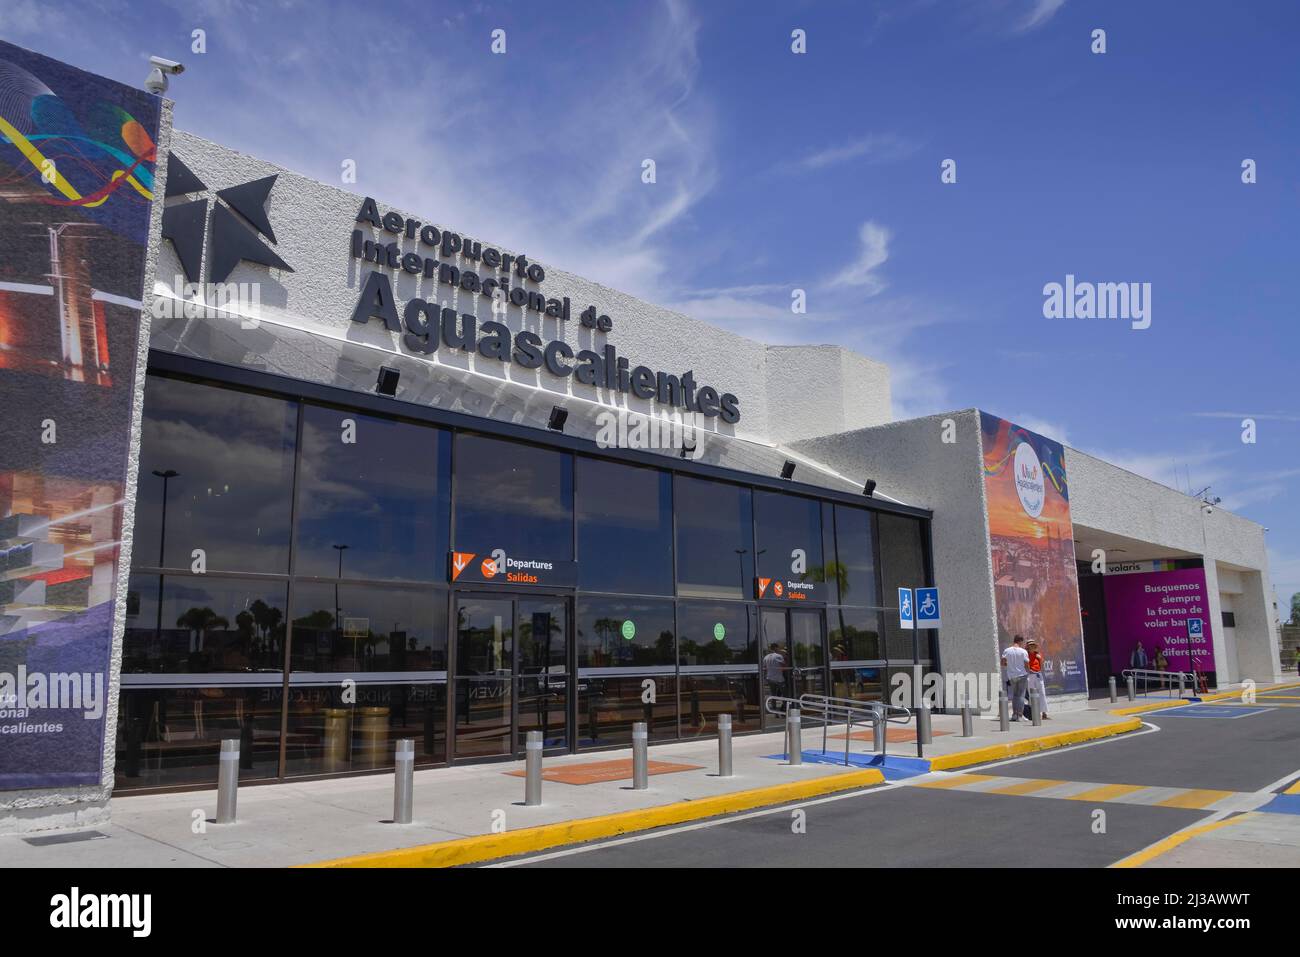 Airport, Aeropuerto Internacional, Aguascalientes, Mexico Stock Photo